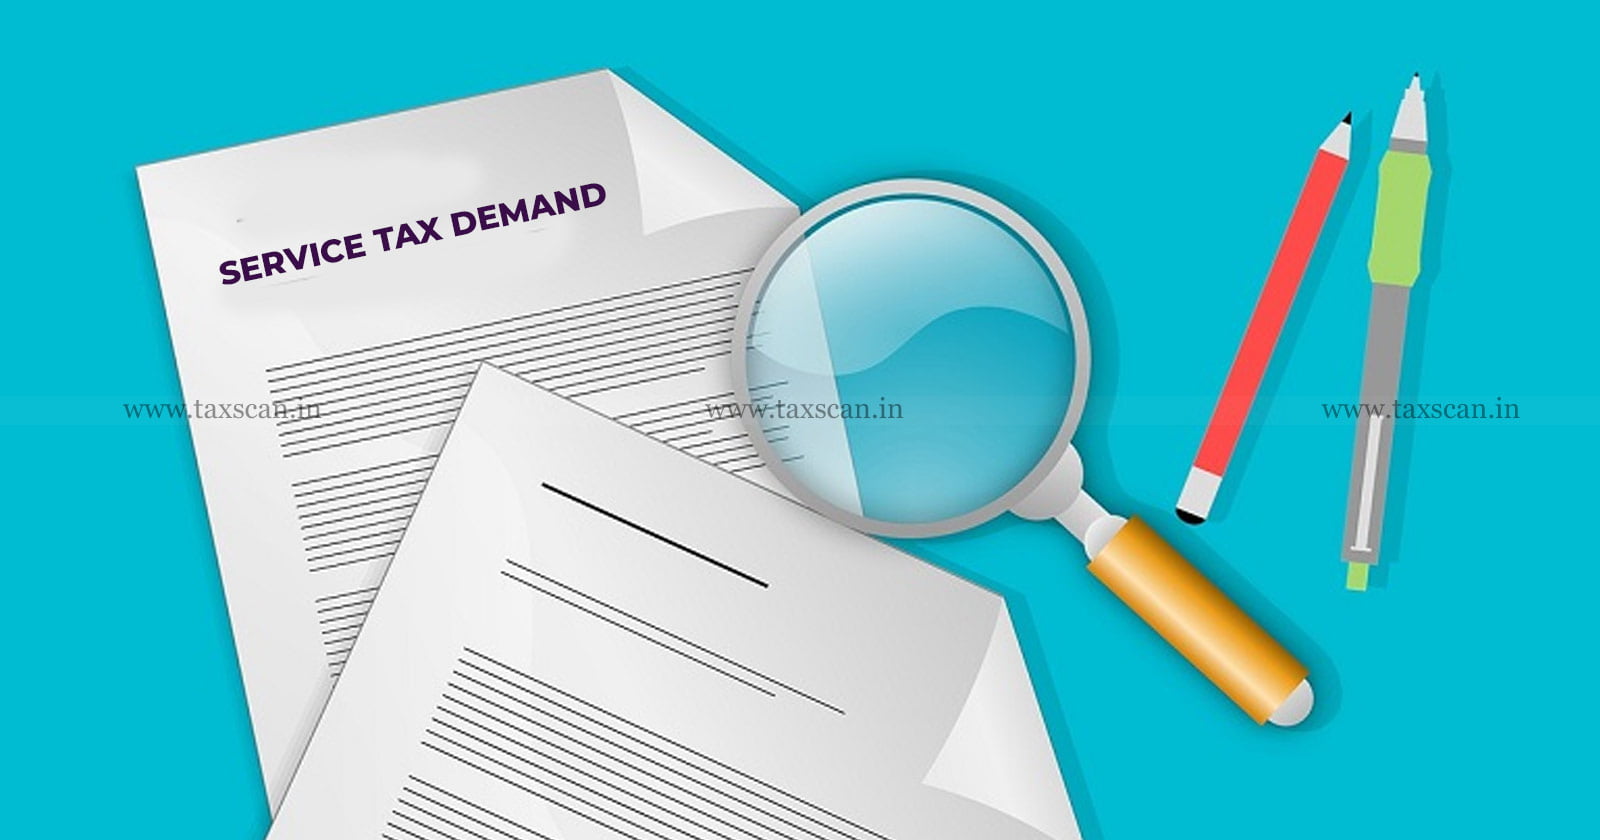 CESTAT - Service - Tax - demand - Taxable - Services - VEIL - TAXSCAN